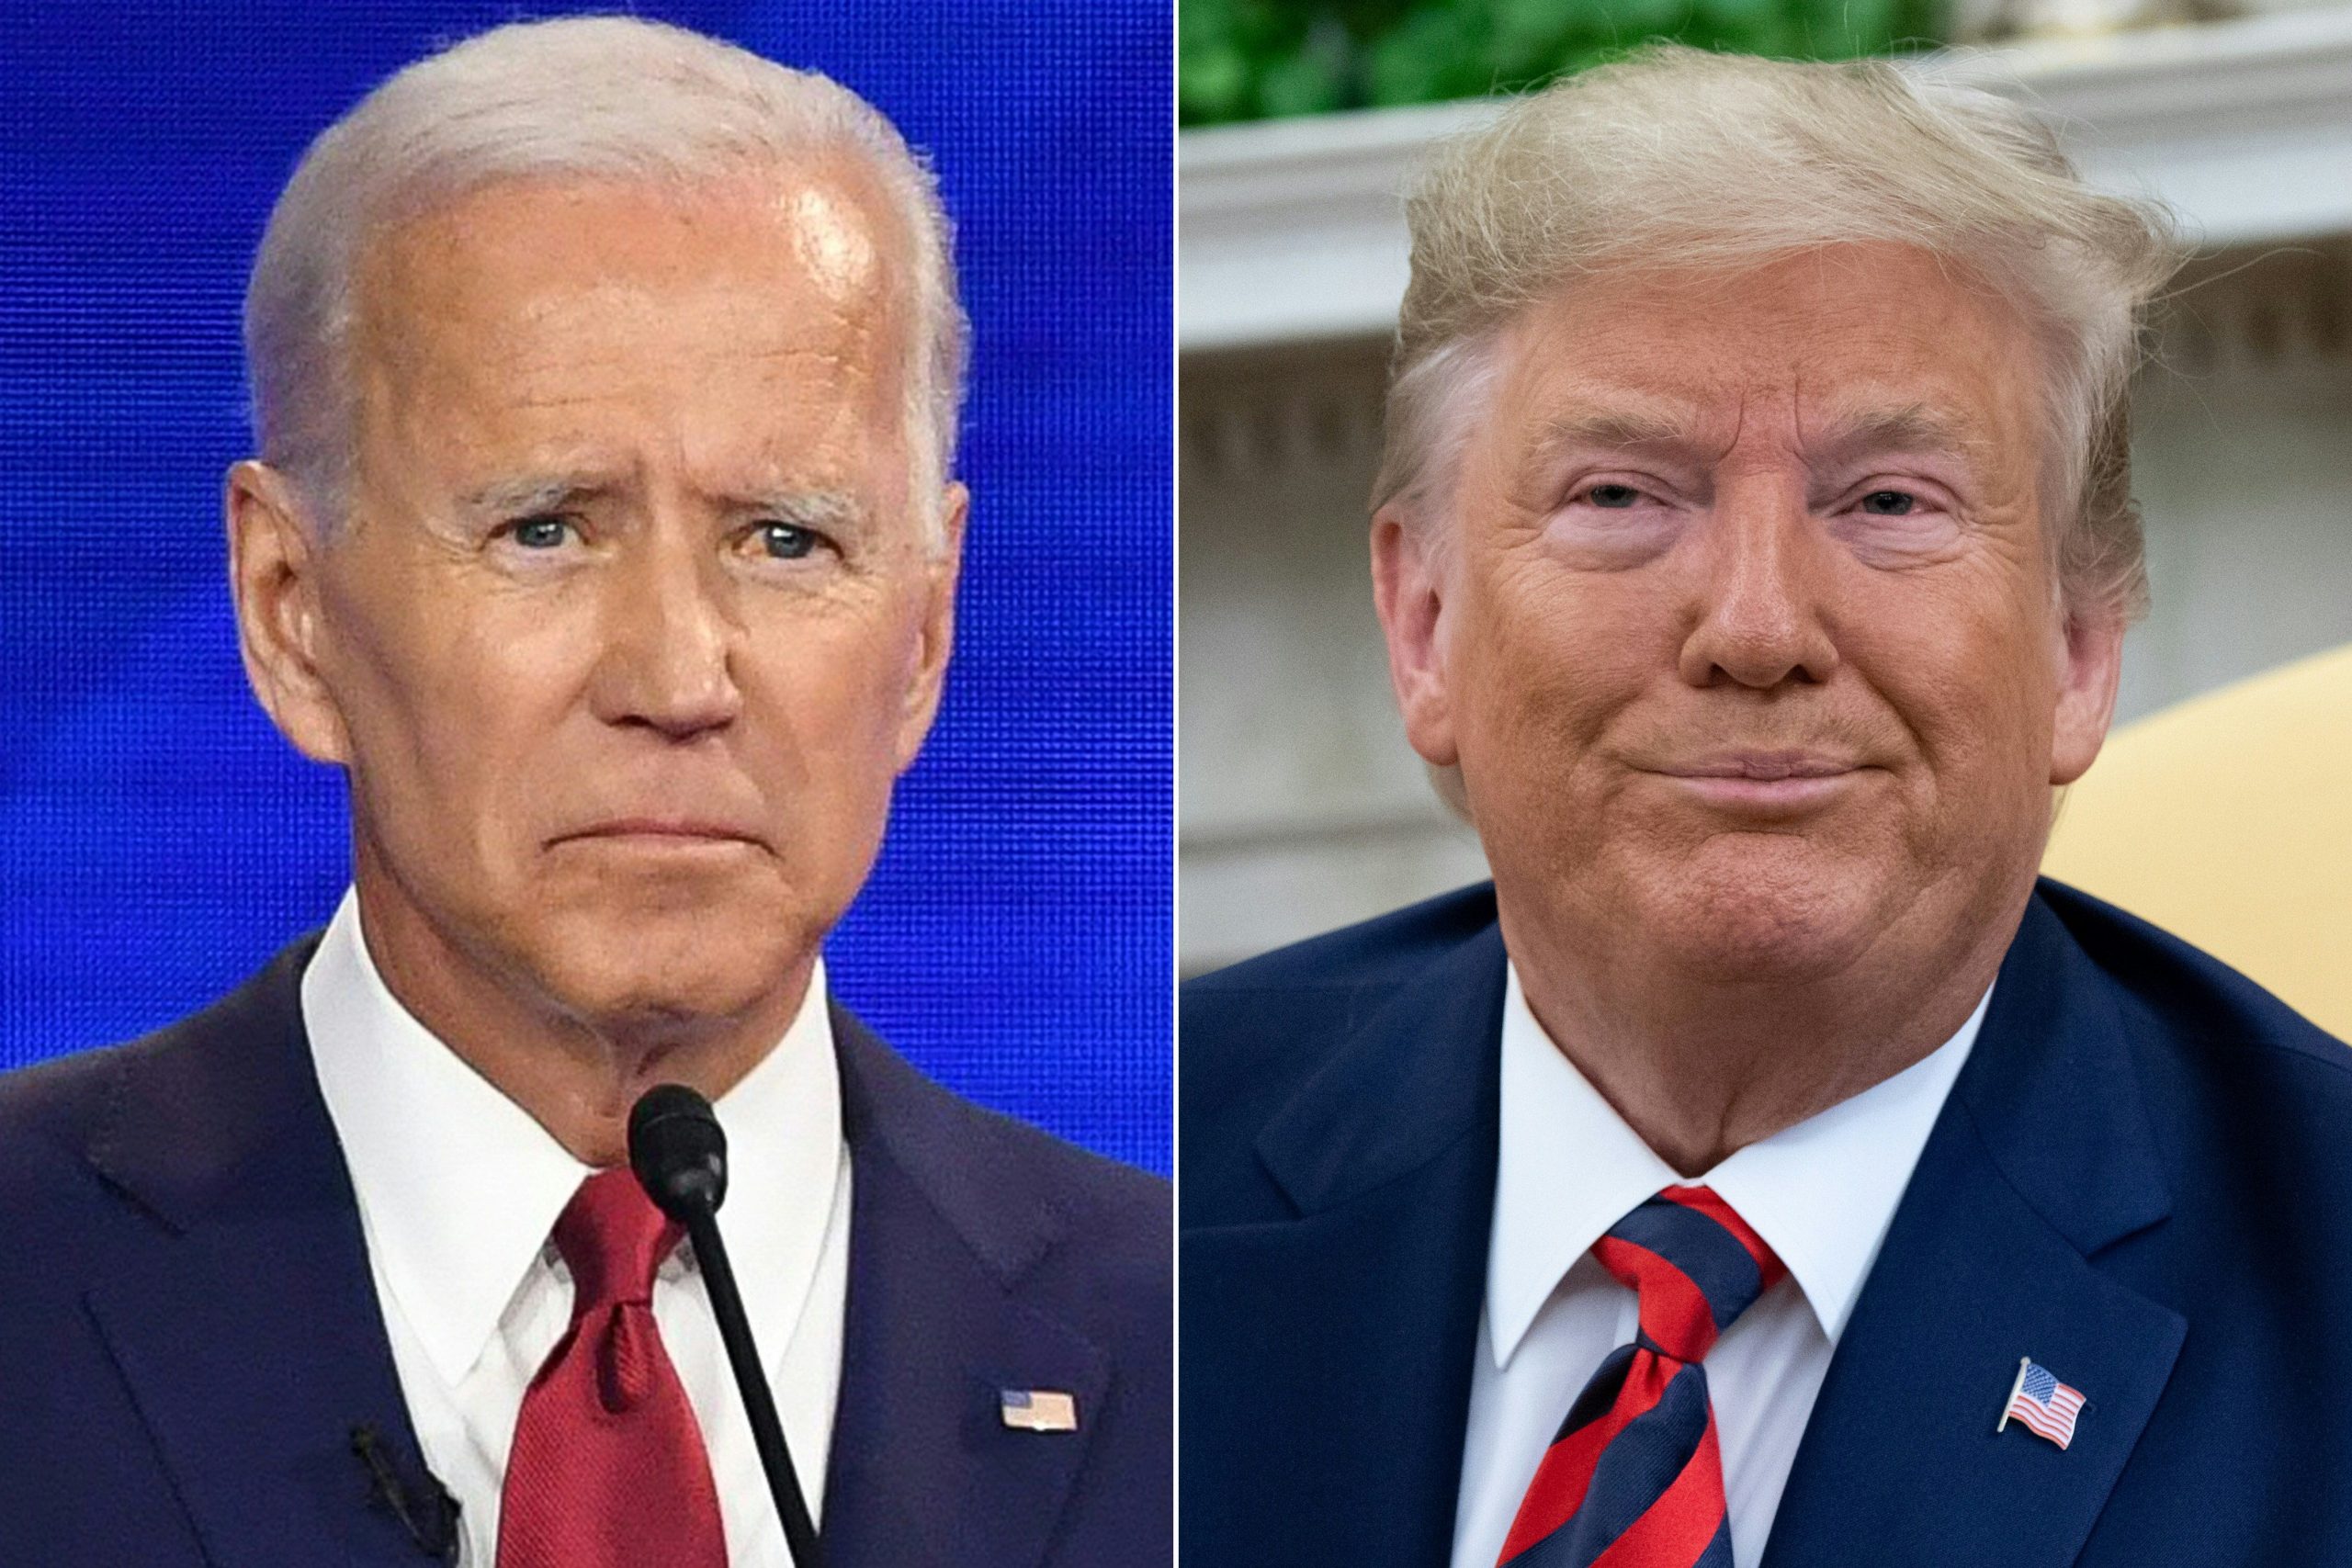 Donald Trump, Joe Biden head into first debate with presidency on the line